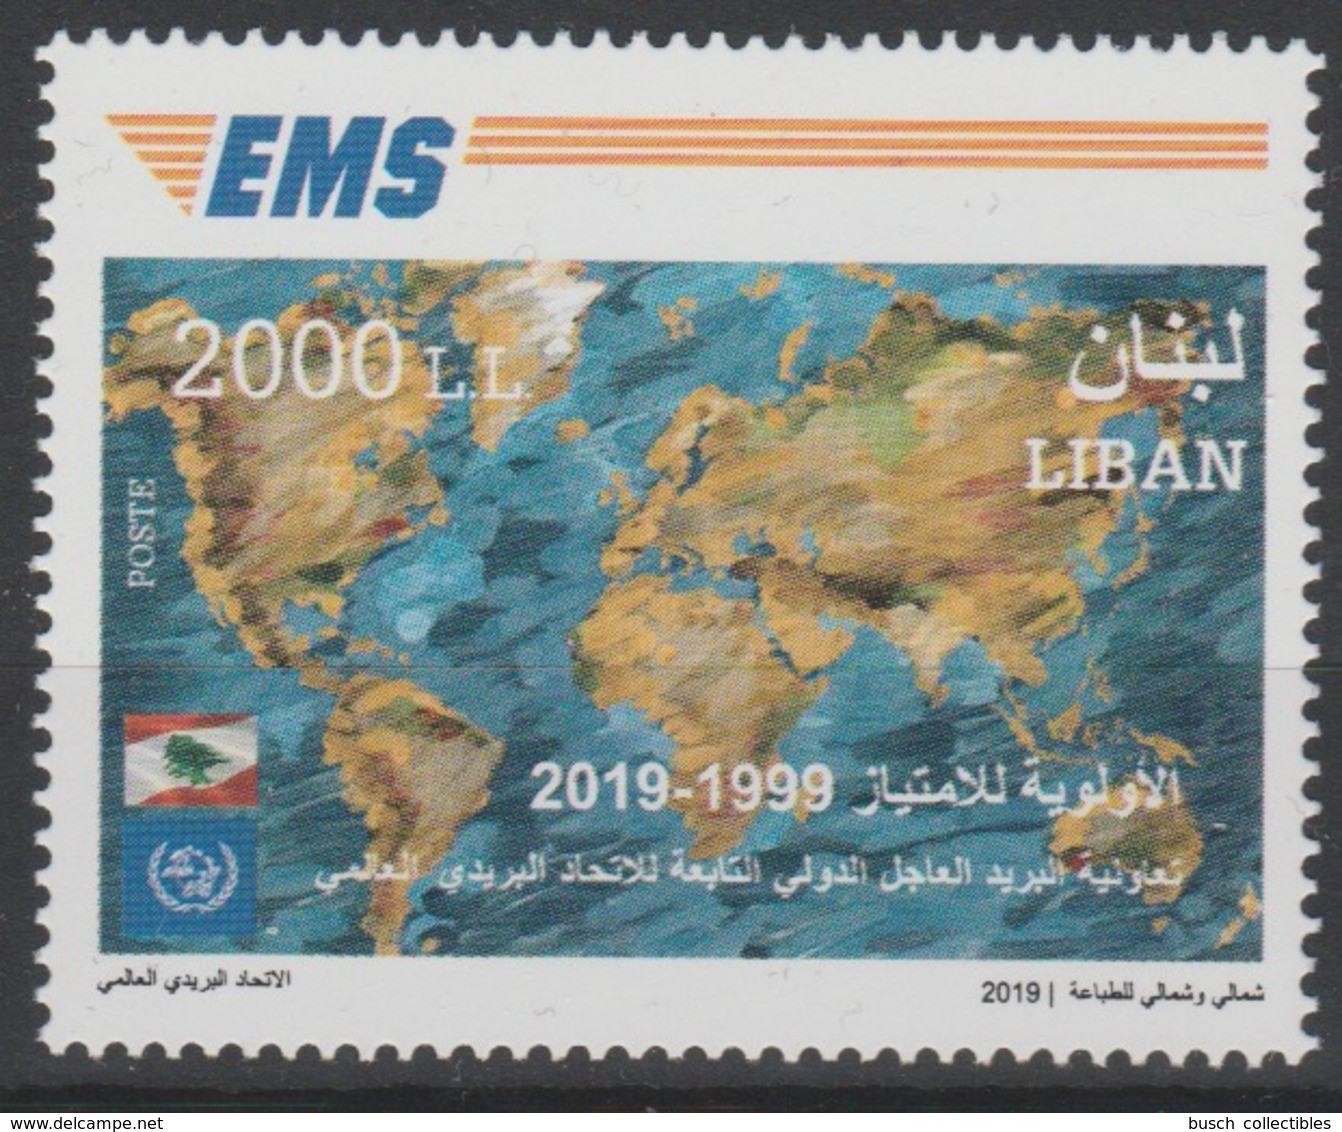 Liban Lebanon Libanon 2019 Mi. ? Joint Issue 20e Anniversaire EMS 20 Years Emission Commune E.M.S. UPU - Emisiones Comunes